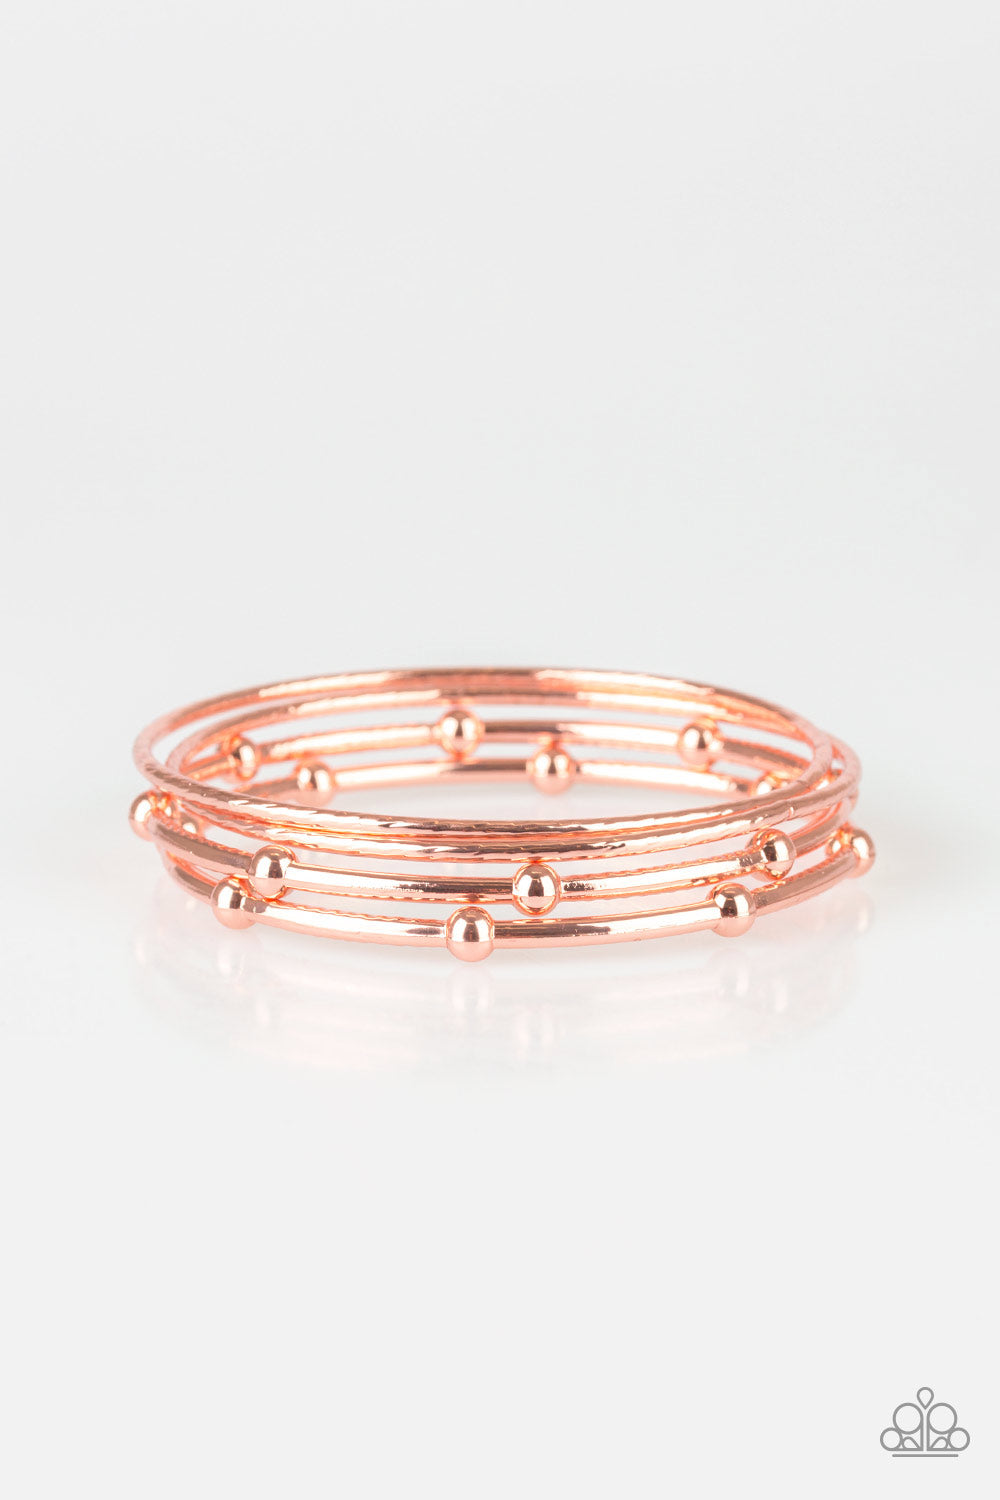 Paparazzi Beauty Basic - Copper - Textured and Beaded Bangle Bracelets - Set of 4 - $5 Jewelry with Ashley Swint